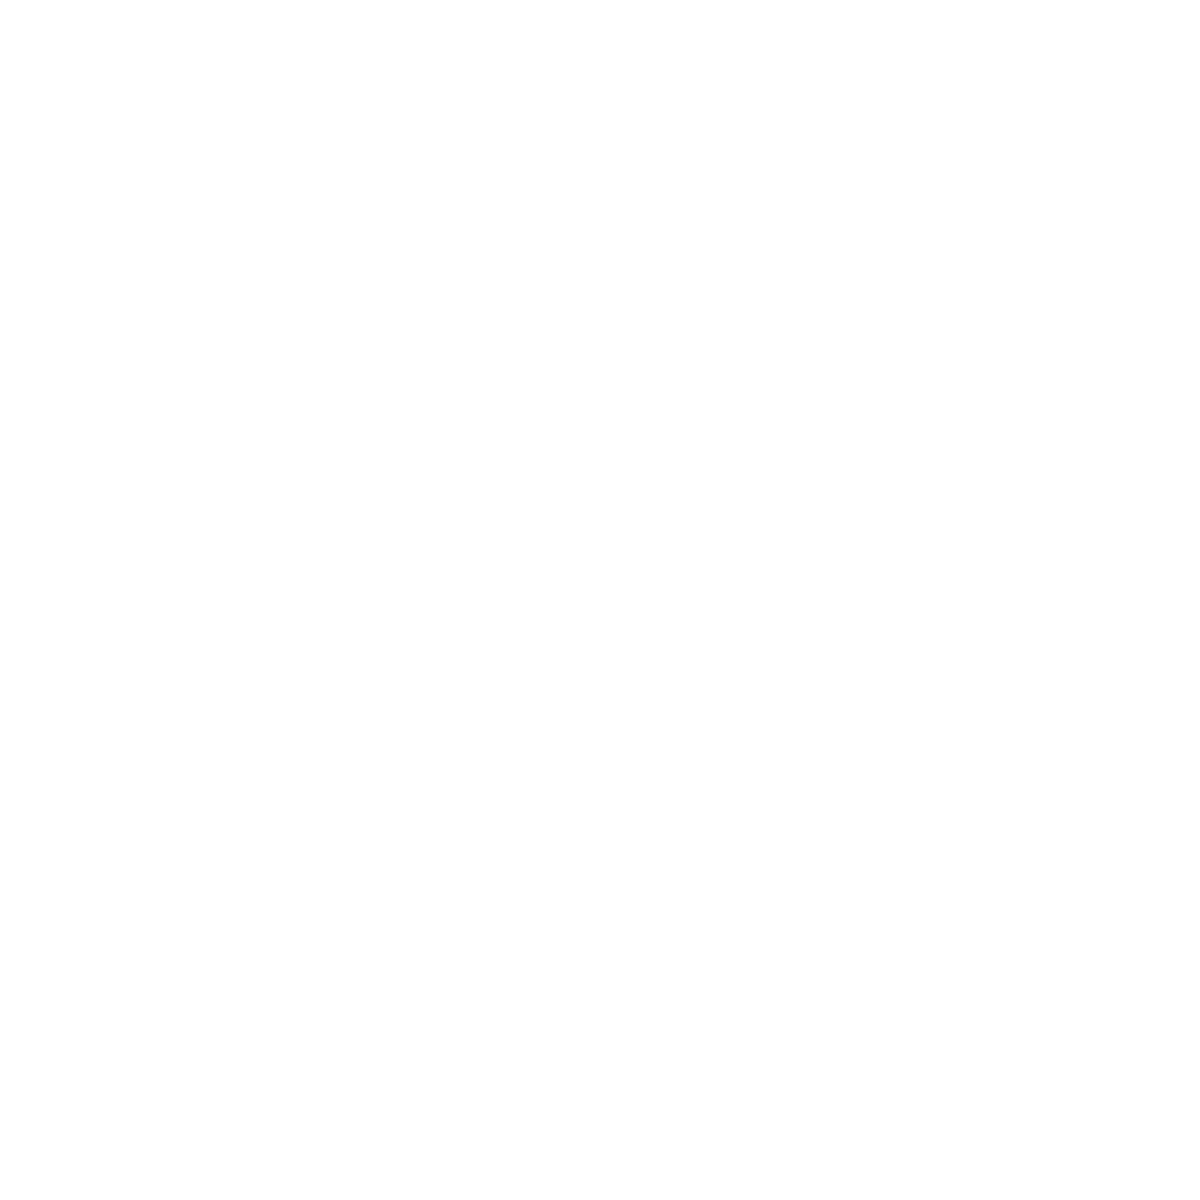 Alior Bank mono